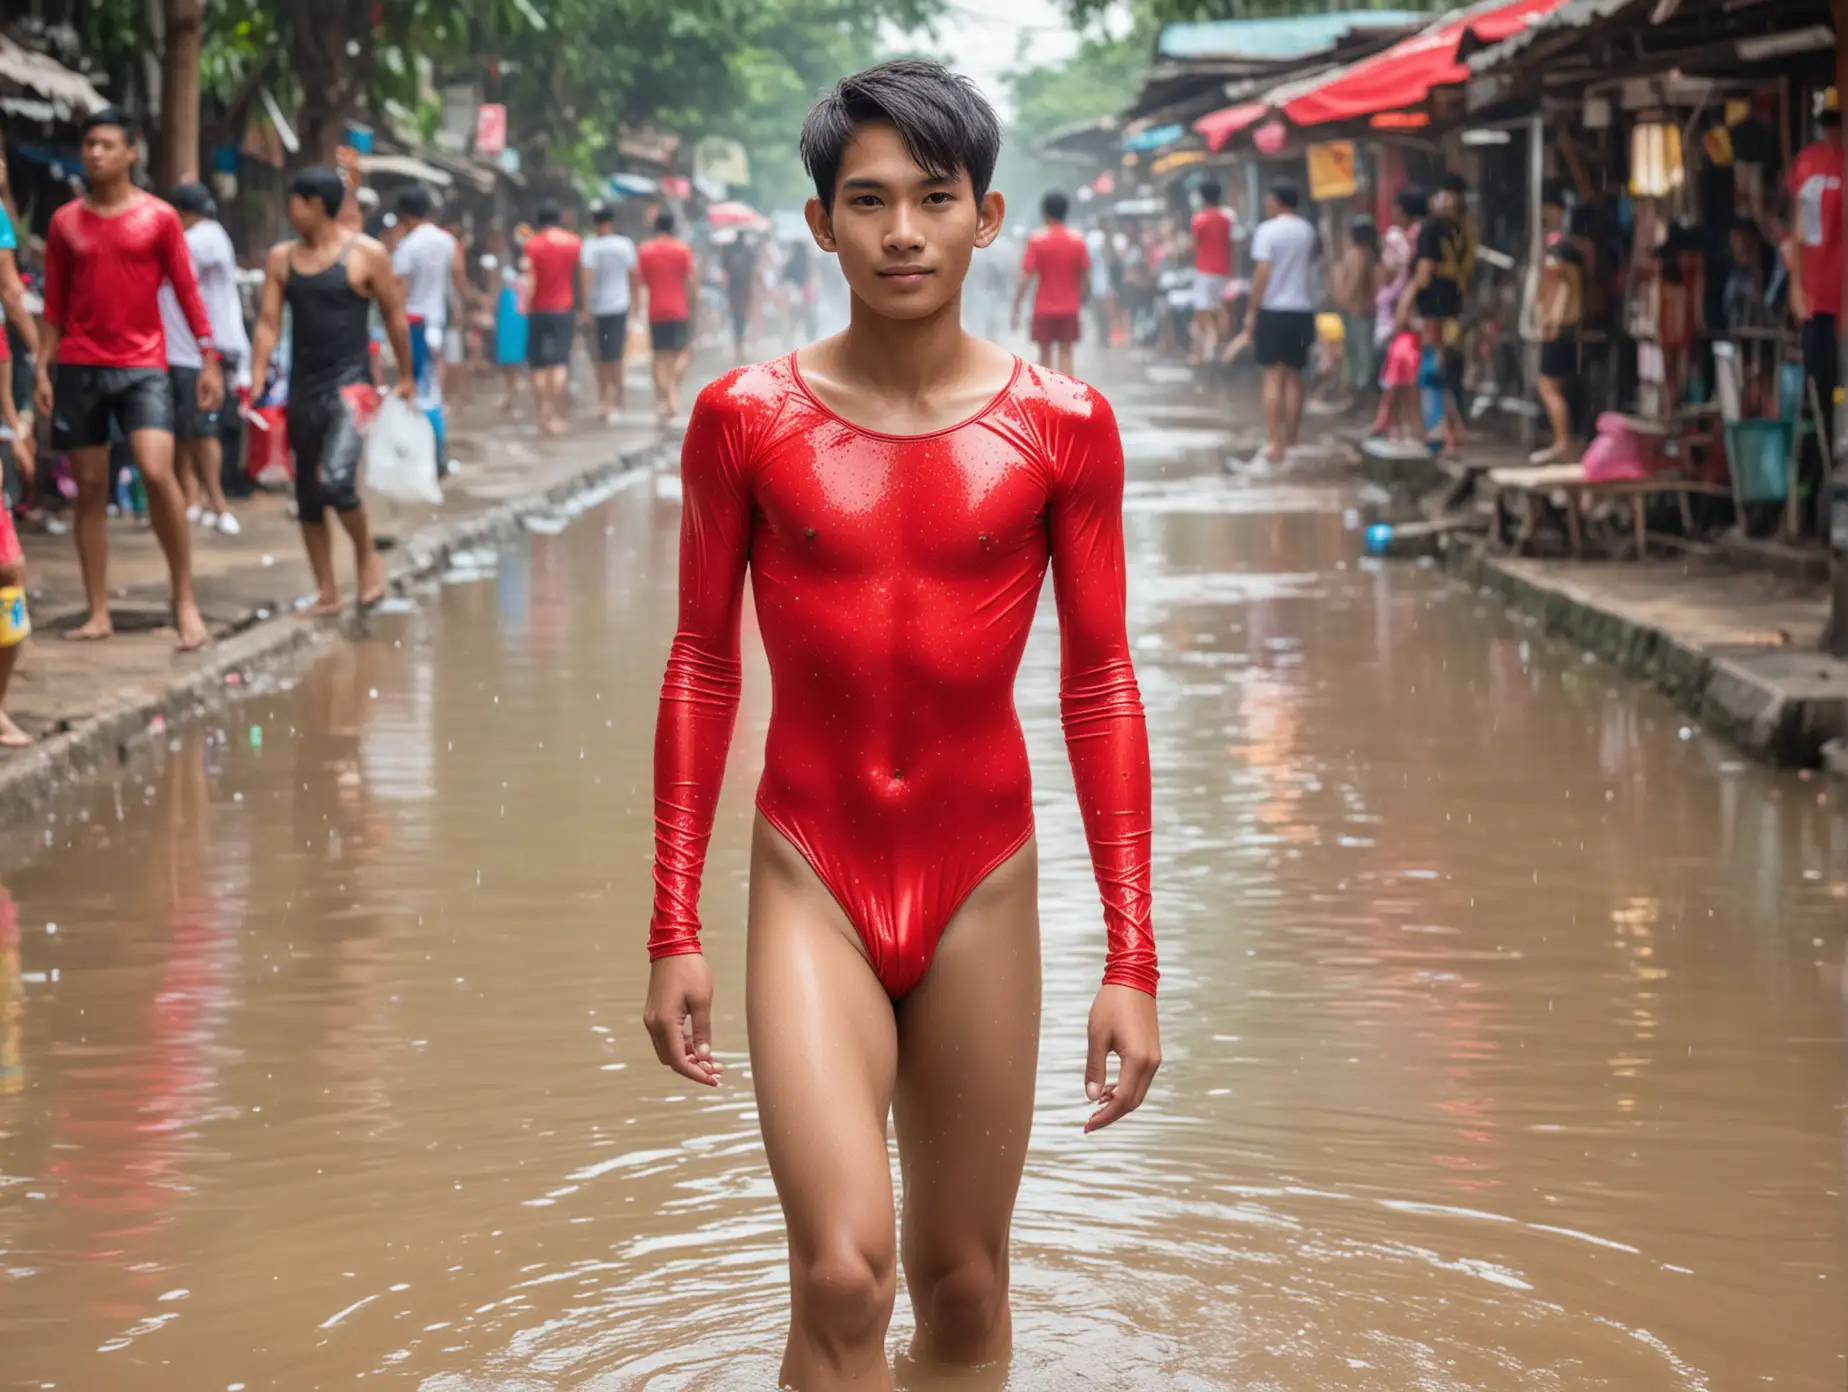 very thin pretty 16 year old Thai boy in skin-tight long-sleeved red leotard walking in Songkran